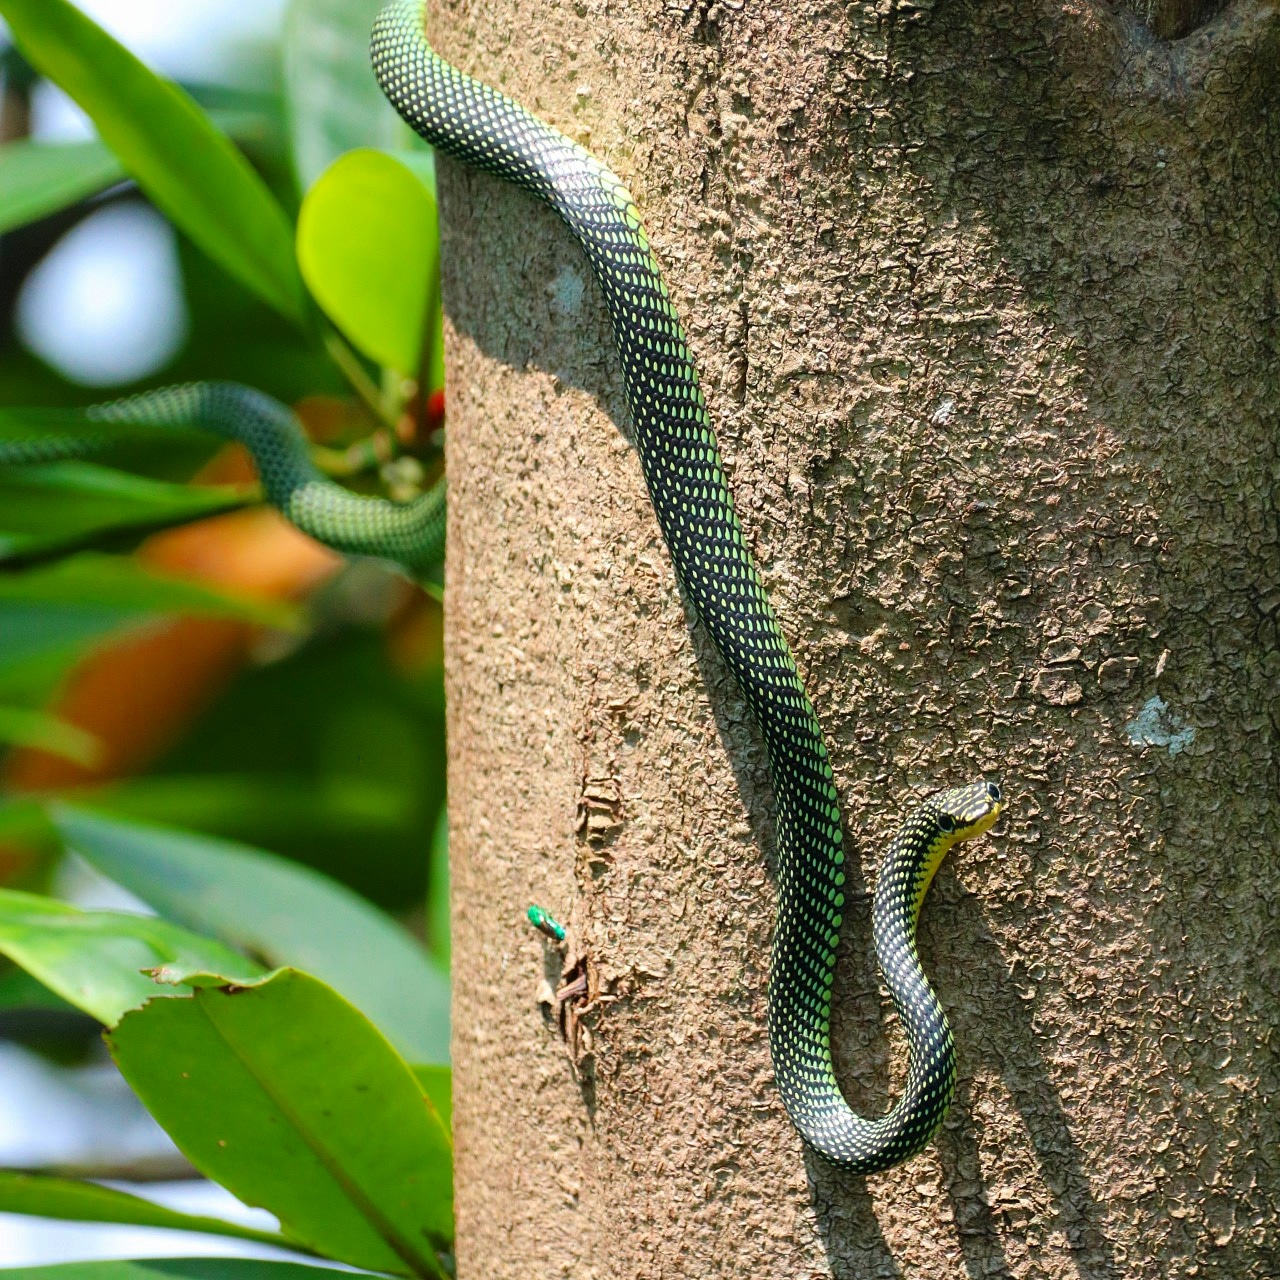 Paradise tree snake